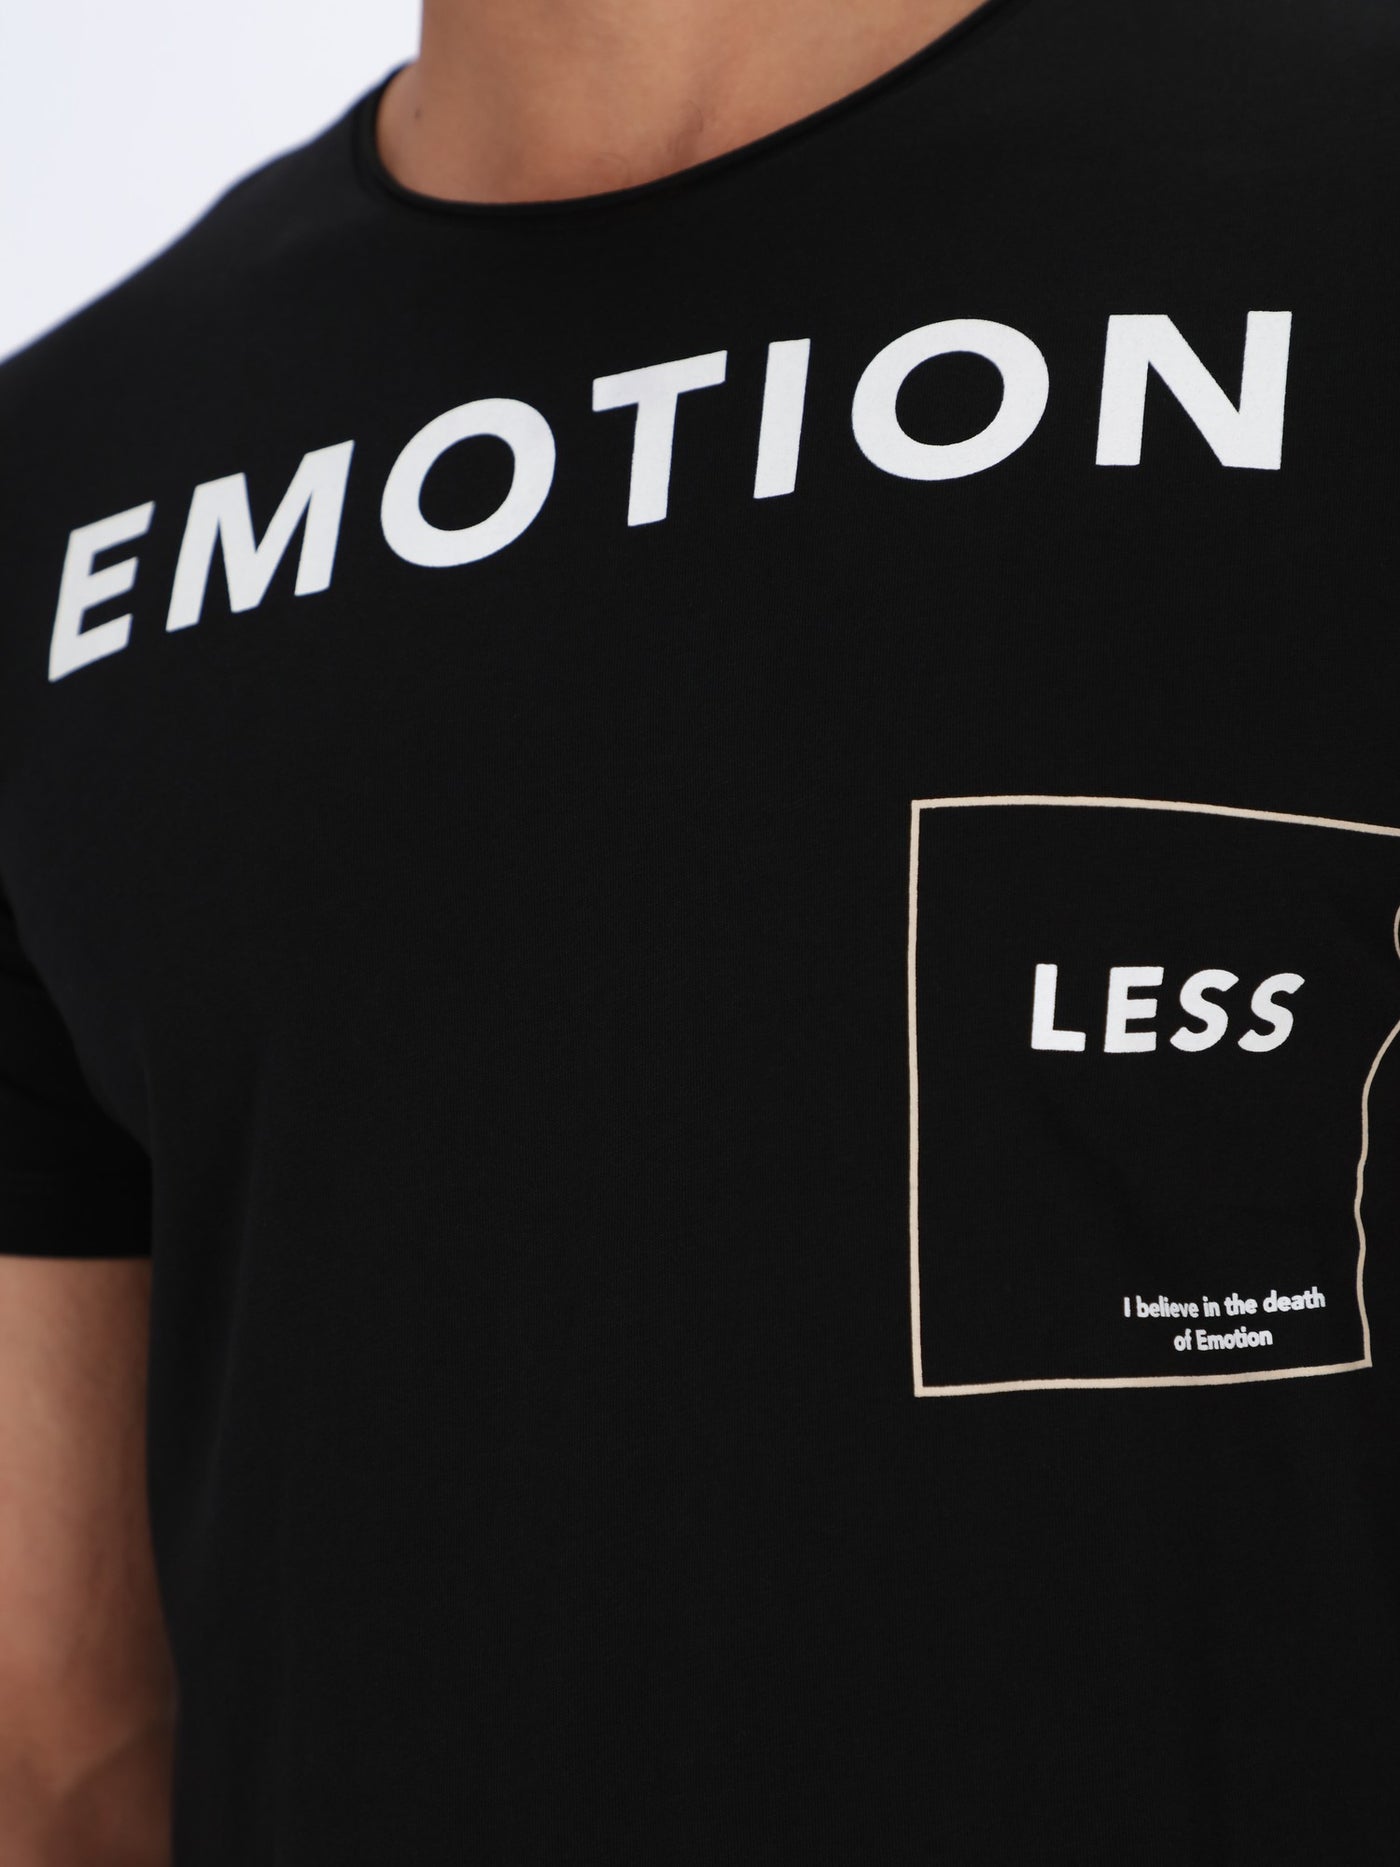 Emotionless Printed T-shirt